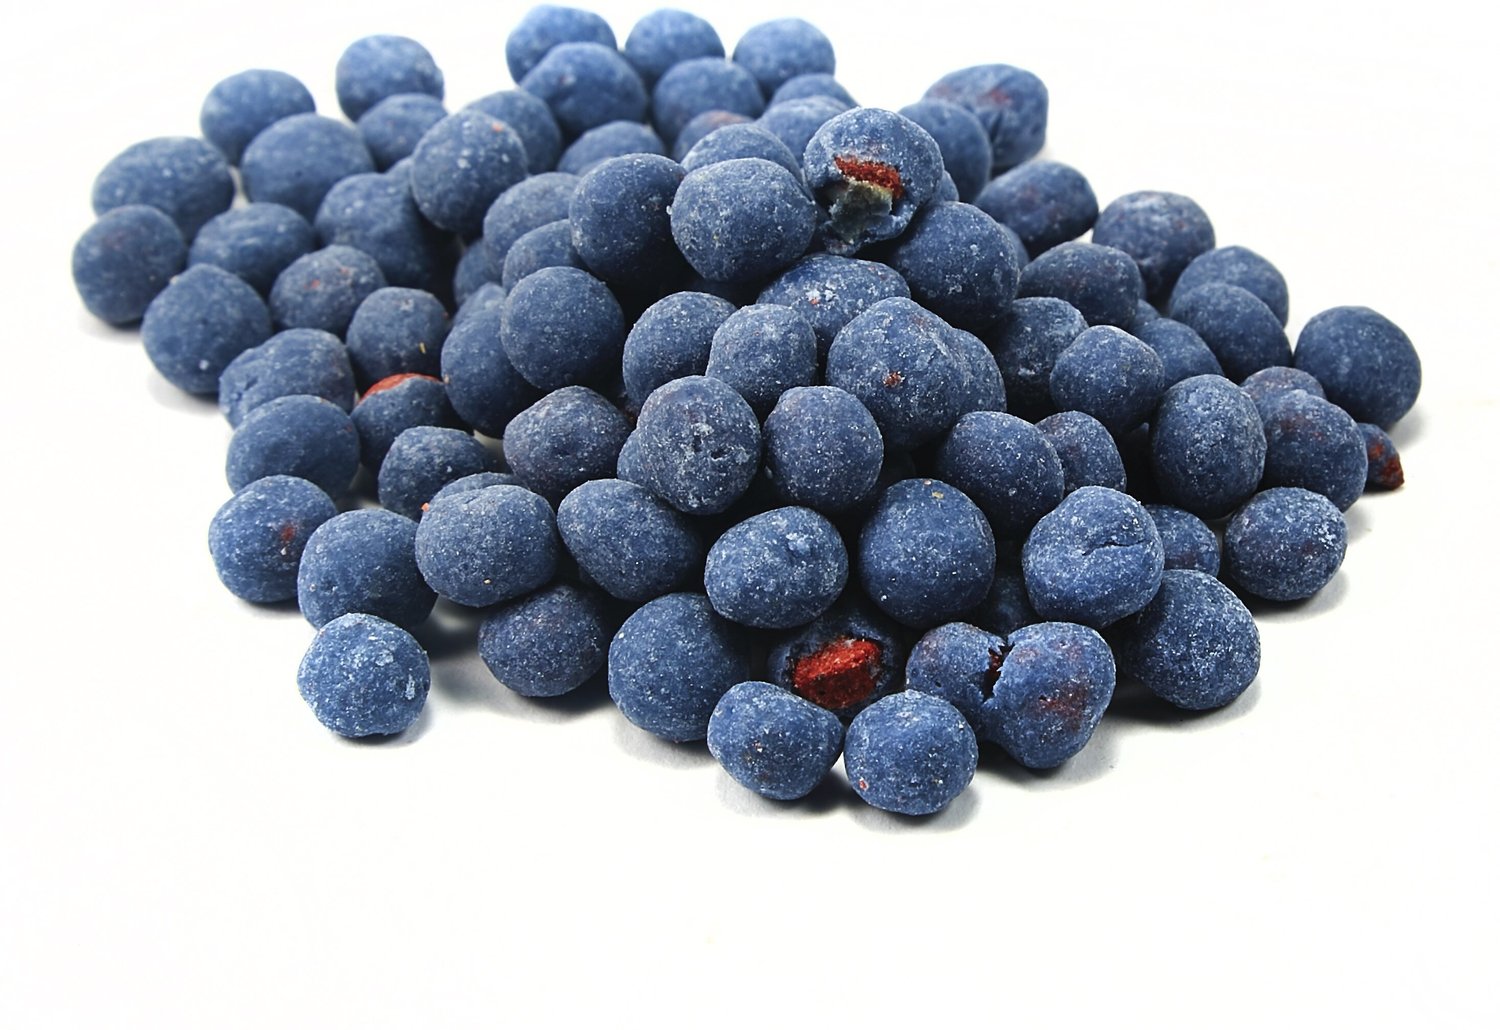 5. Kaytee Fiesta Blueberry Flavored Yogurt Dipped Treats